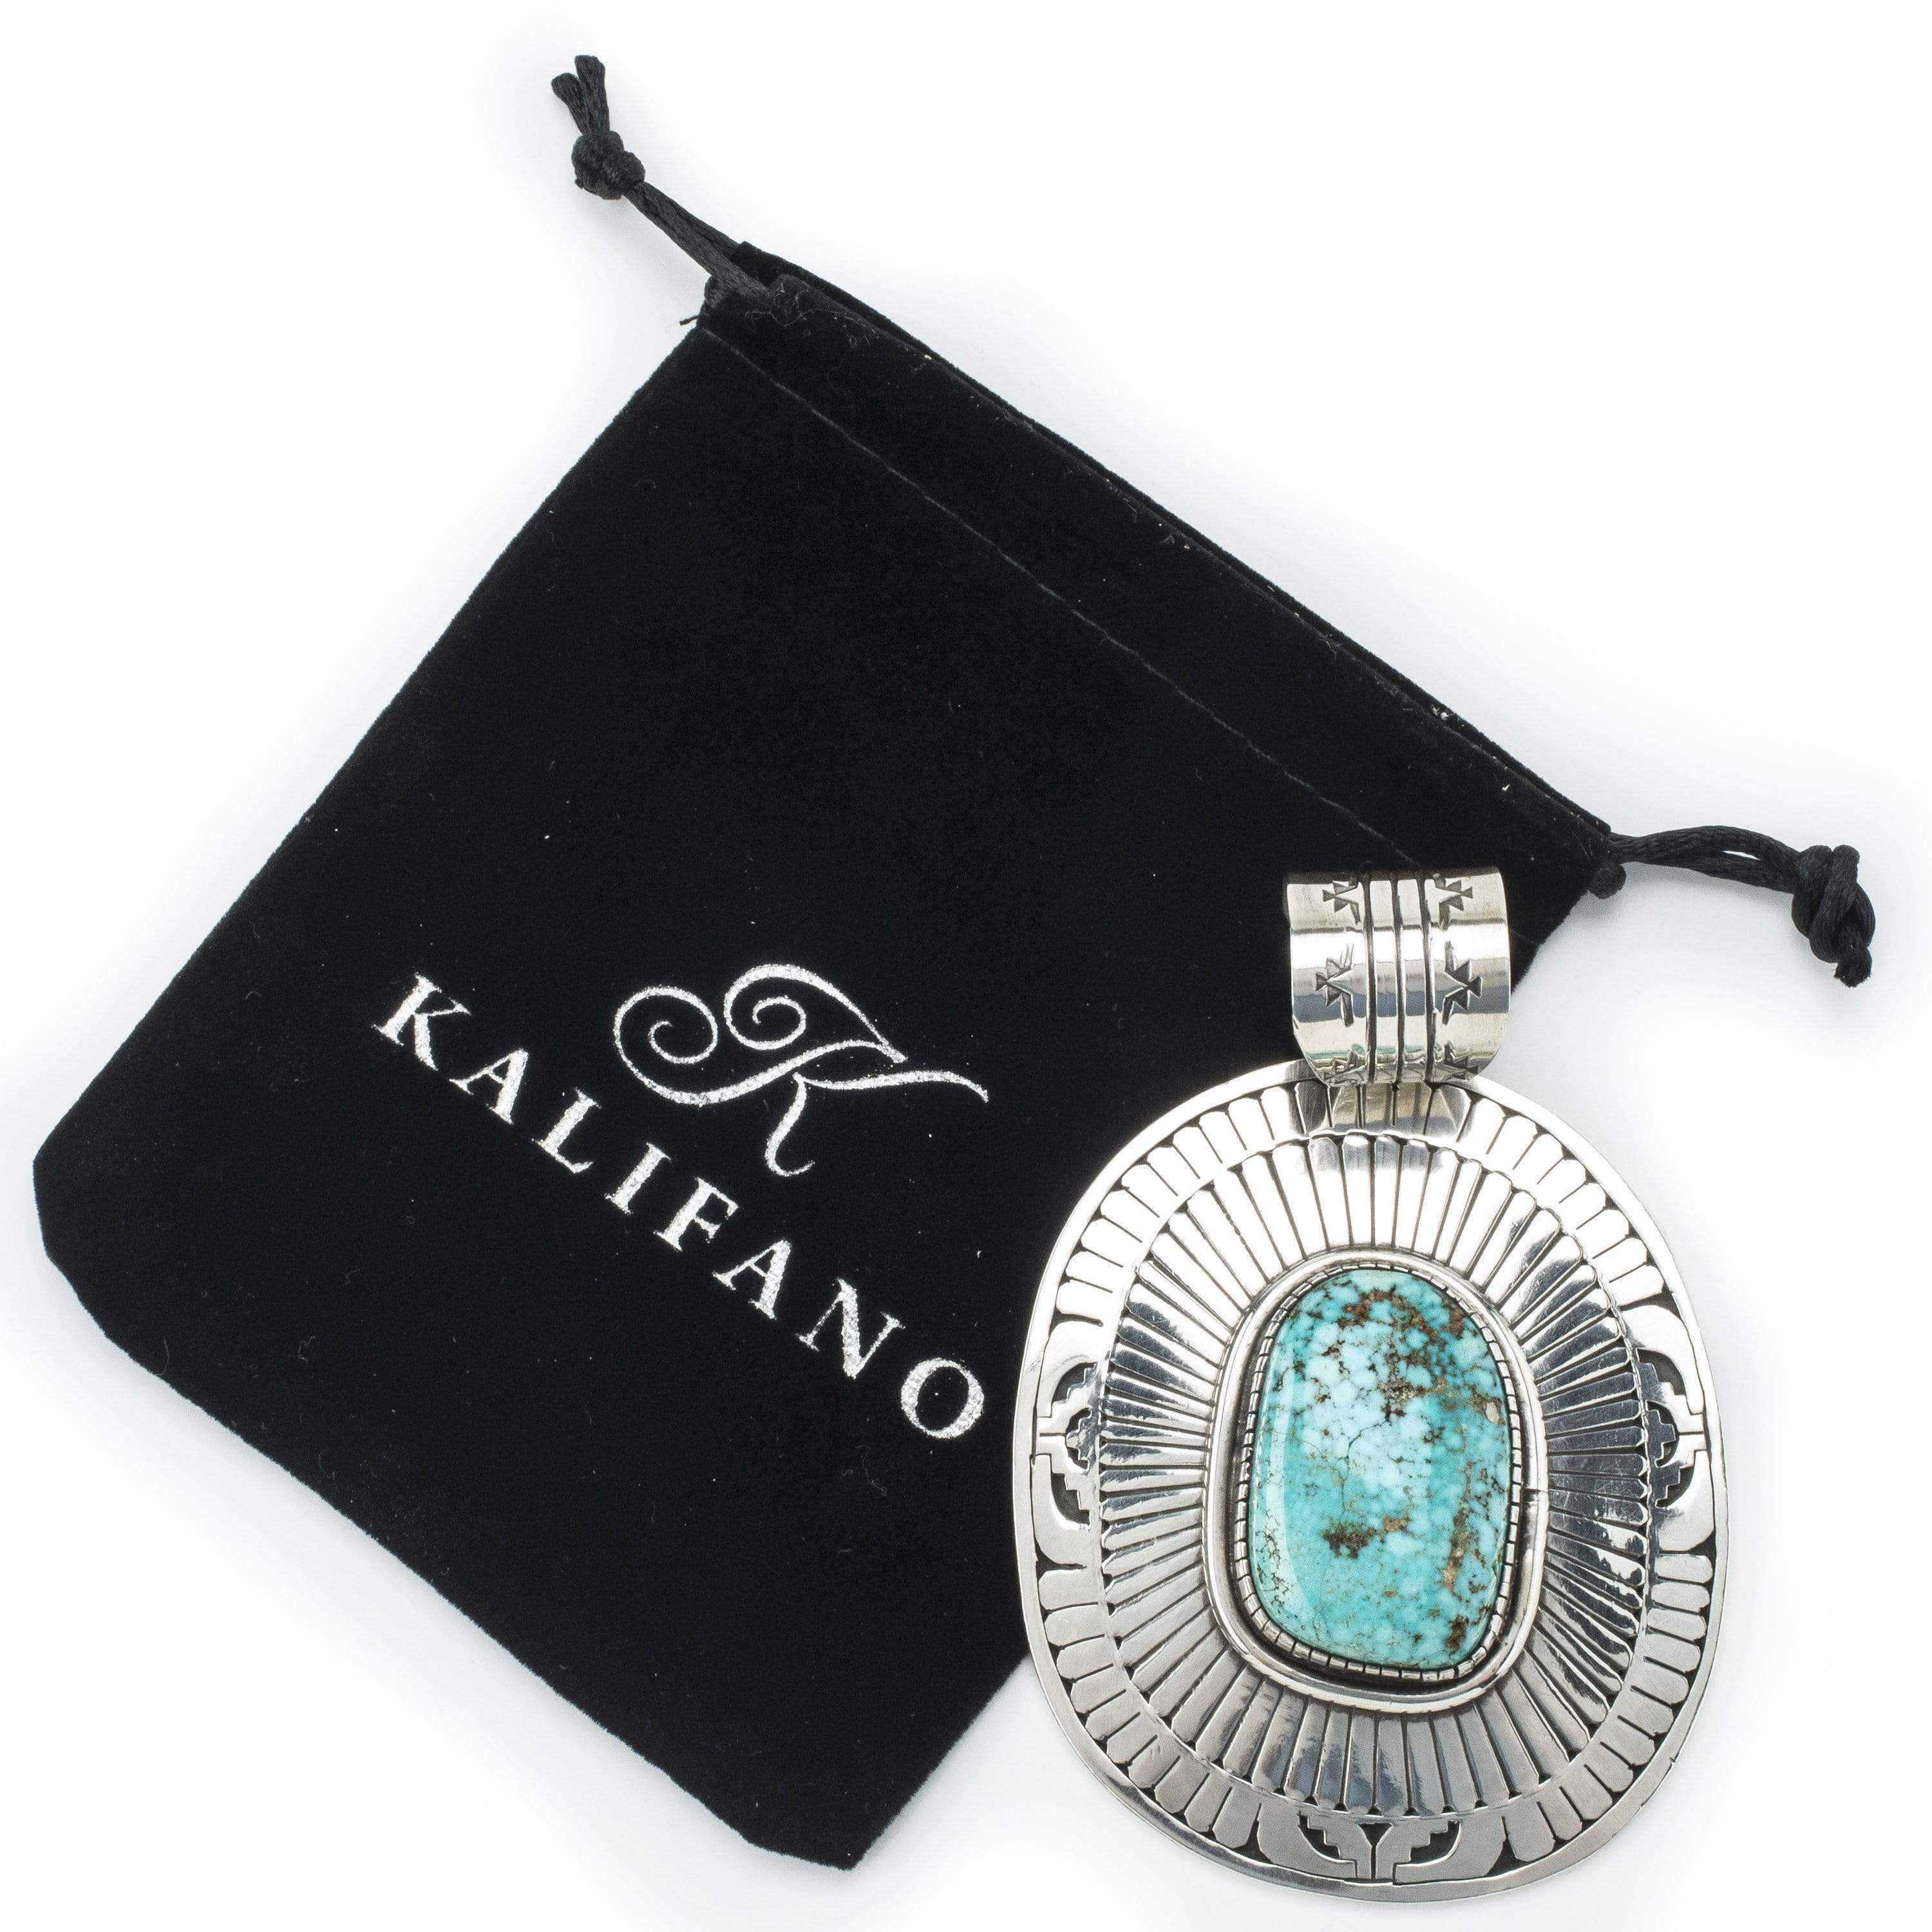 Kalifano Native American Jewelry Carico Lake Turquoise USA Native American Made 925 Sterling Silver Pendant NAN3300.001